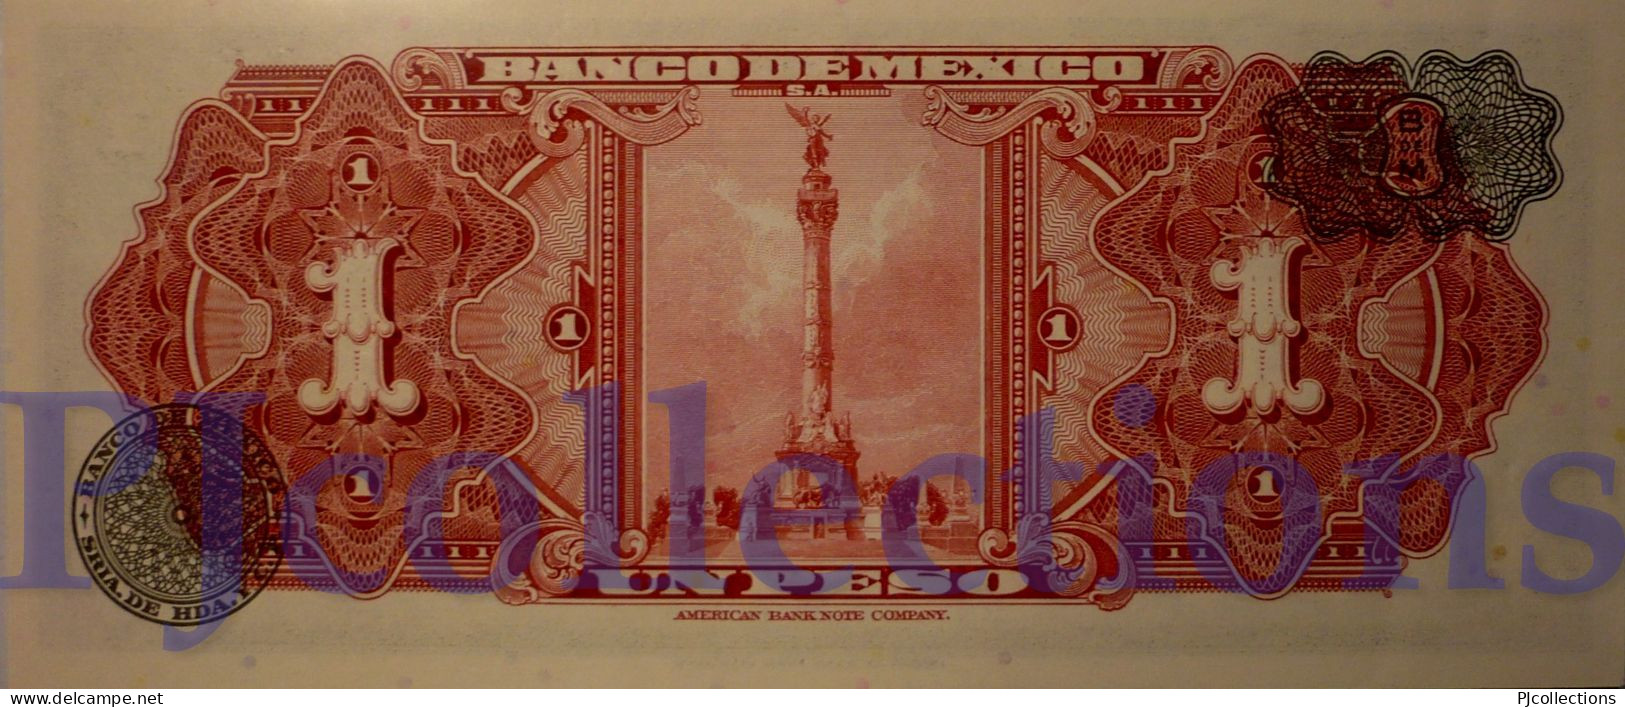 MEXICO 1 PESO 1967 PICK 59j AUNC - Mexique